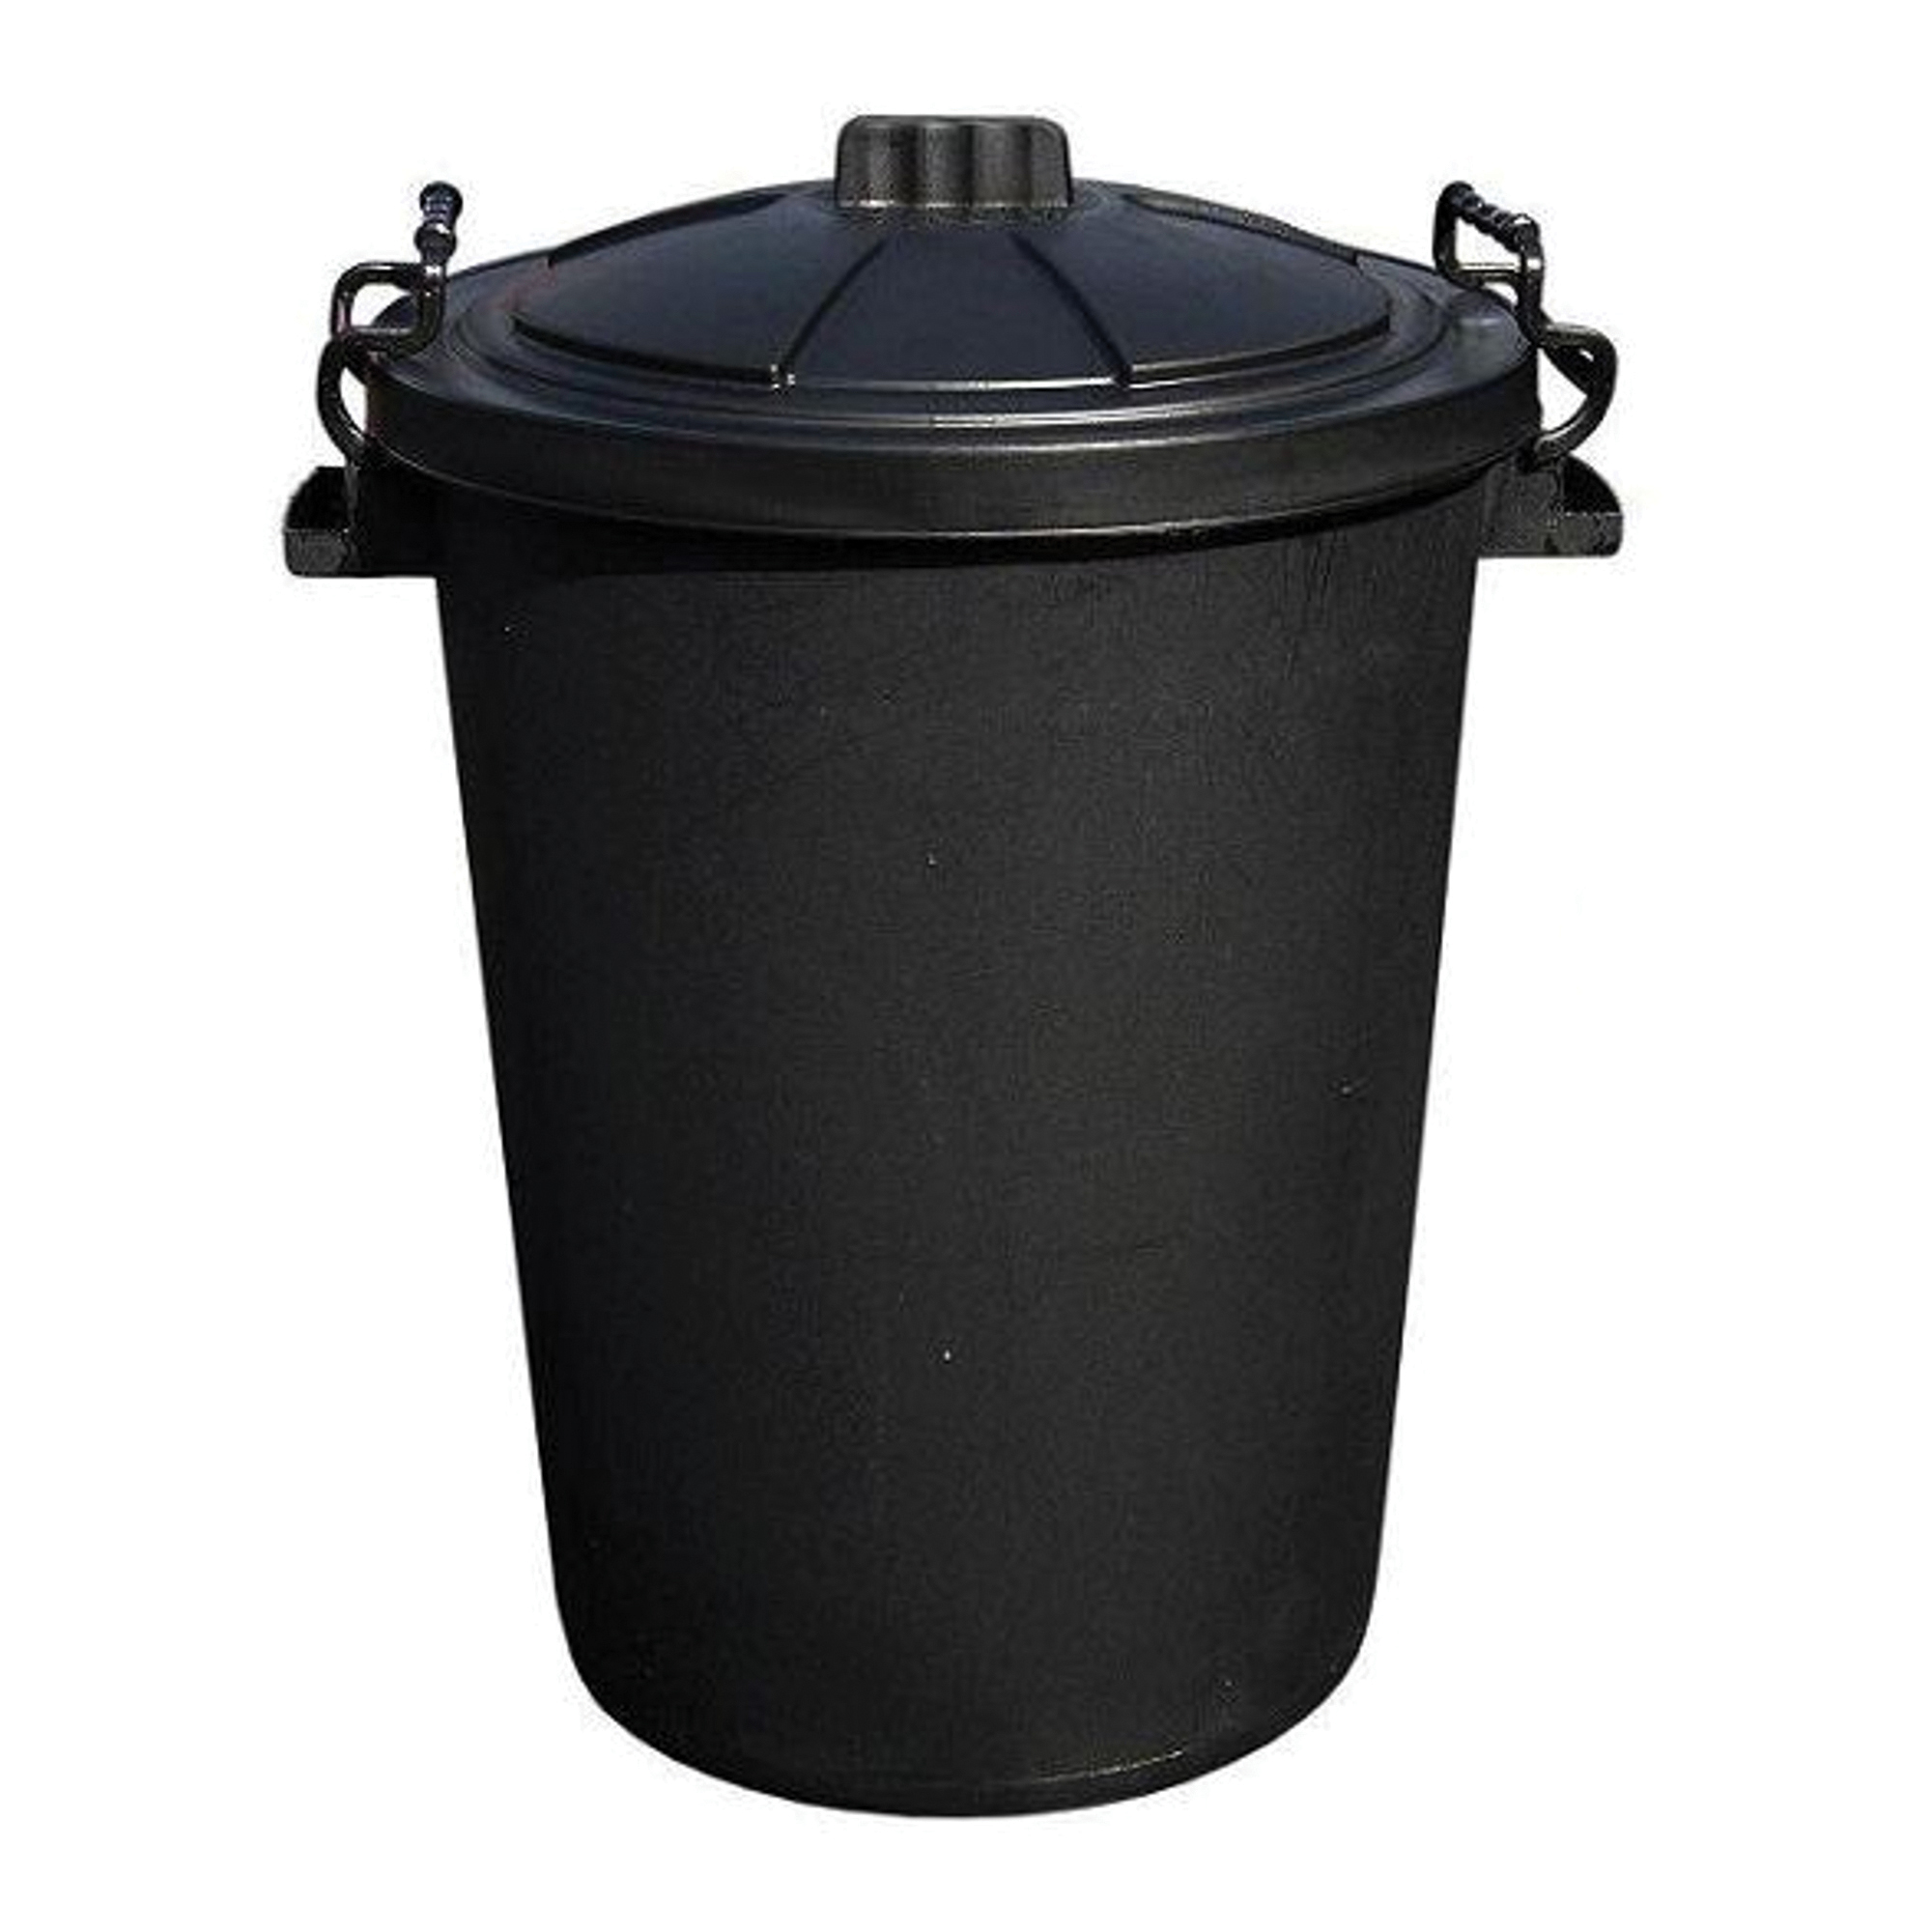 Black Waste Bin with Clip On lid, 80-85L